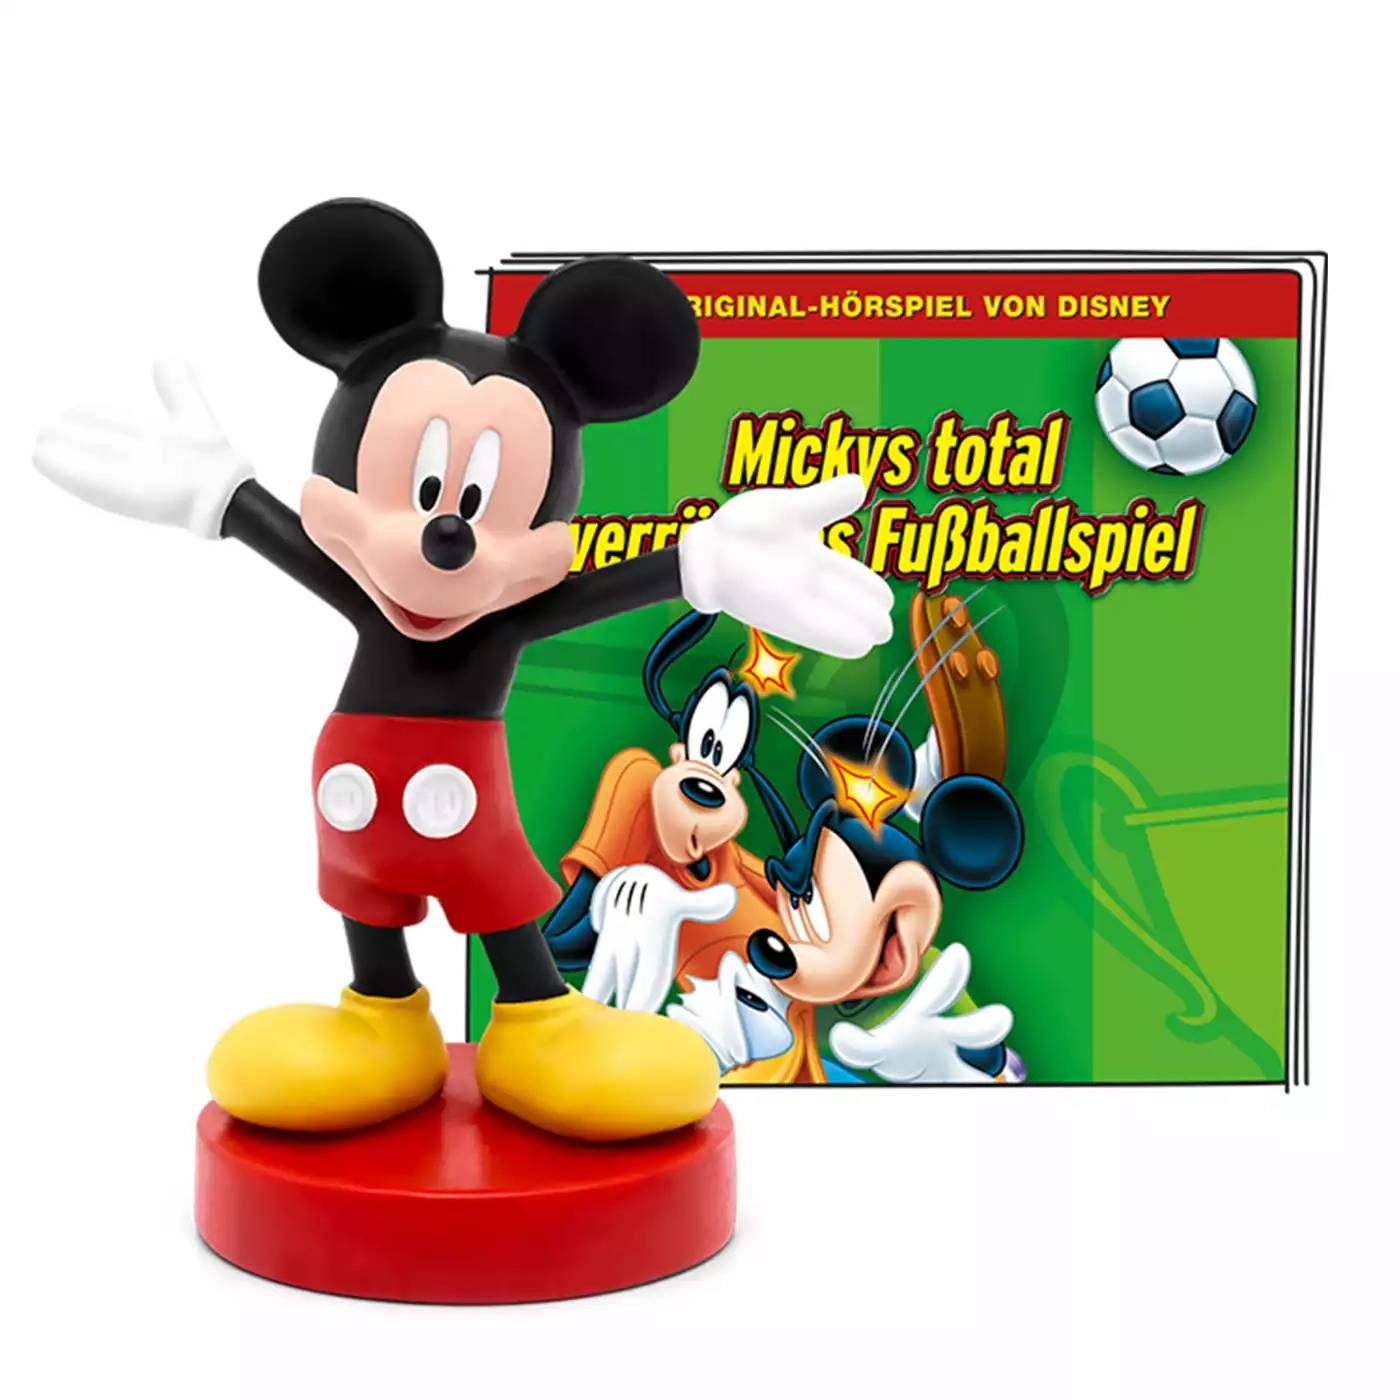 Disney - Mickys total verrücktes Fußballspiel tonies 2000581064307 1